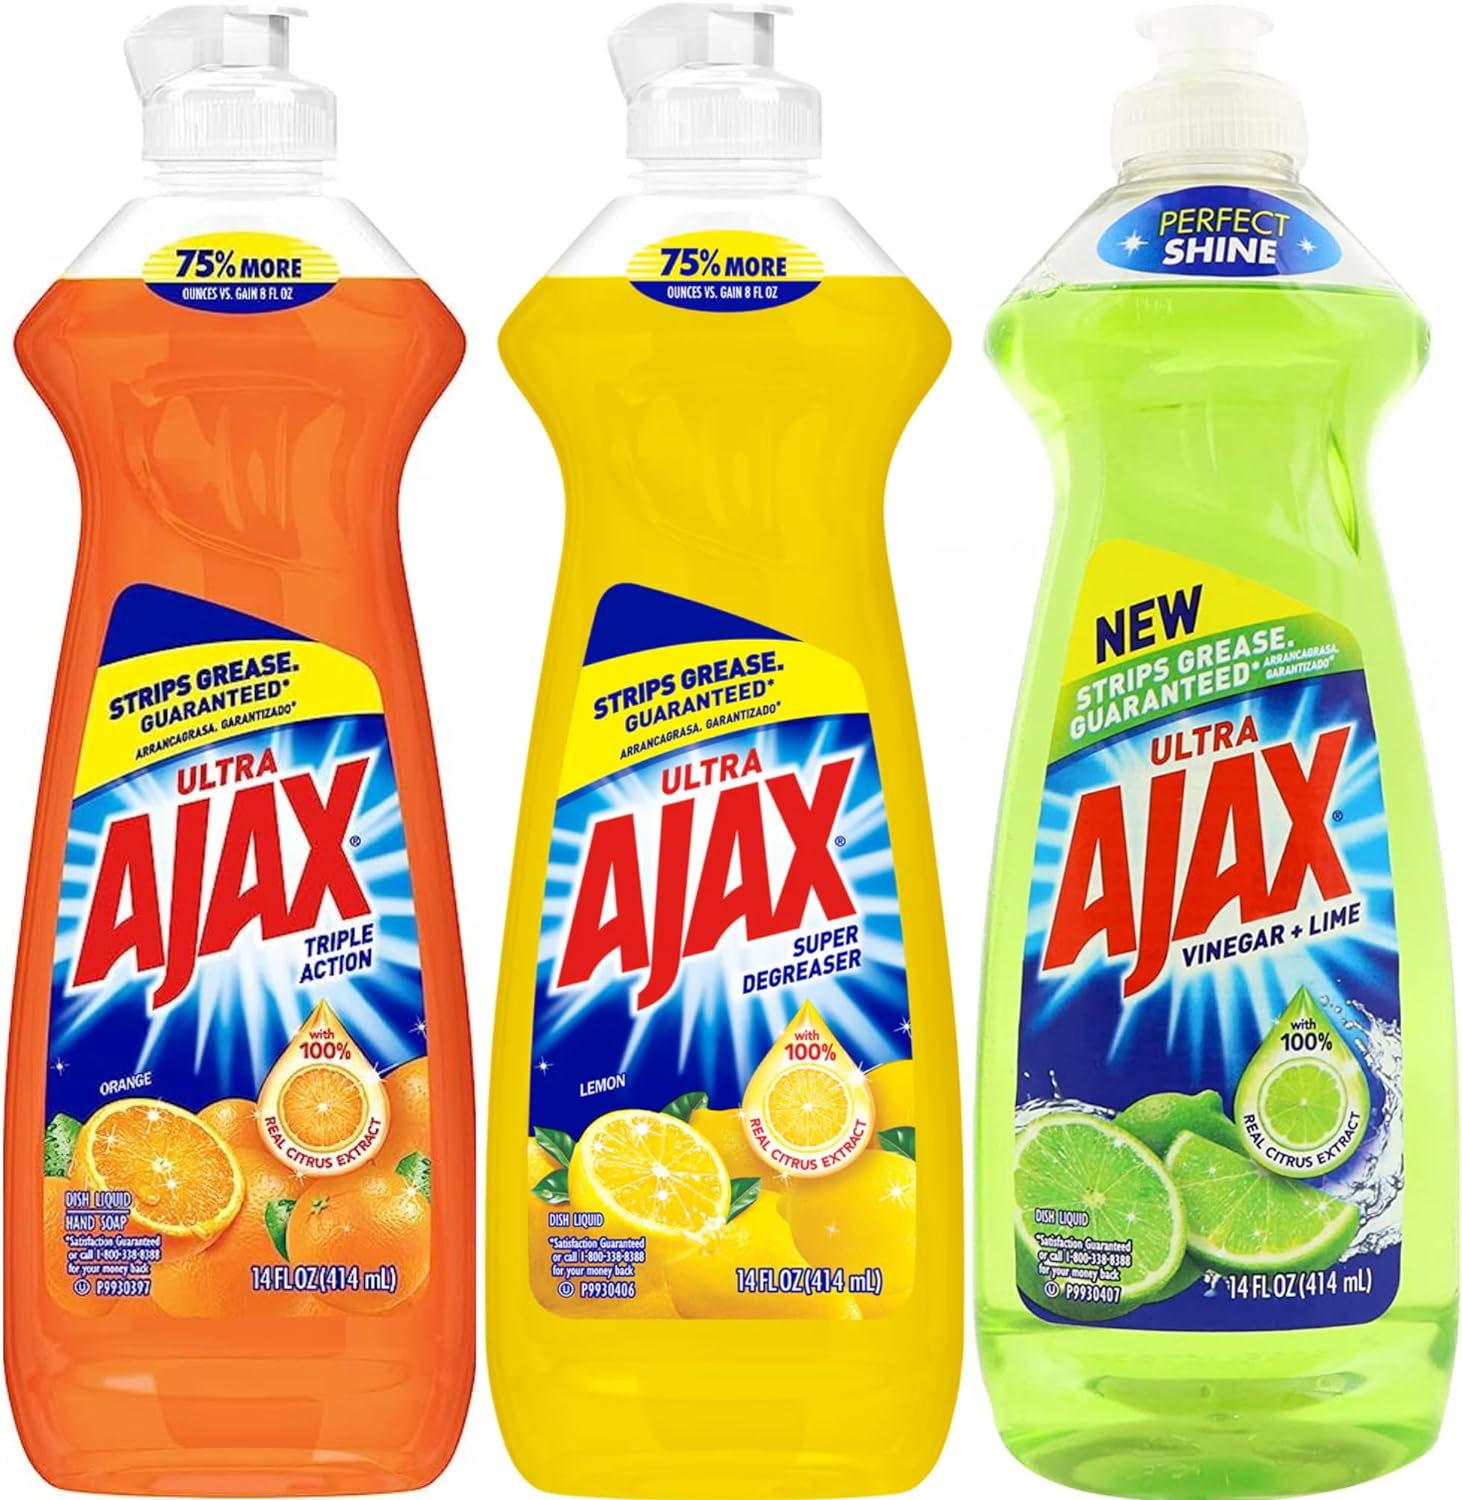 Ajax Dish Soap - Ajax Dishwashing Liquid Super Degreaser 14 FL OZ (Lemon, Orange, Lime) (Variety Pack of 3) 1 of Each - Includes Clean is Better Card